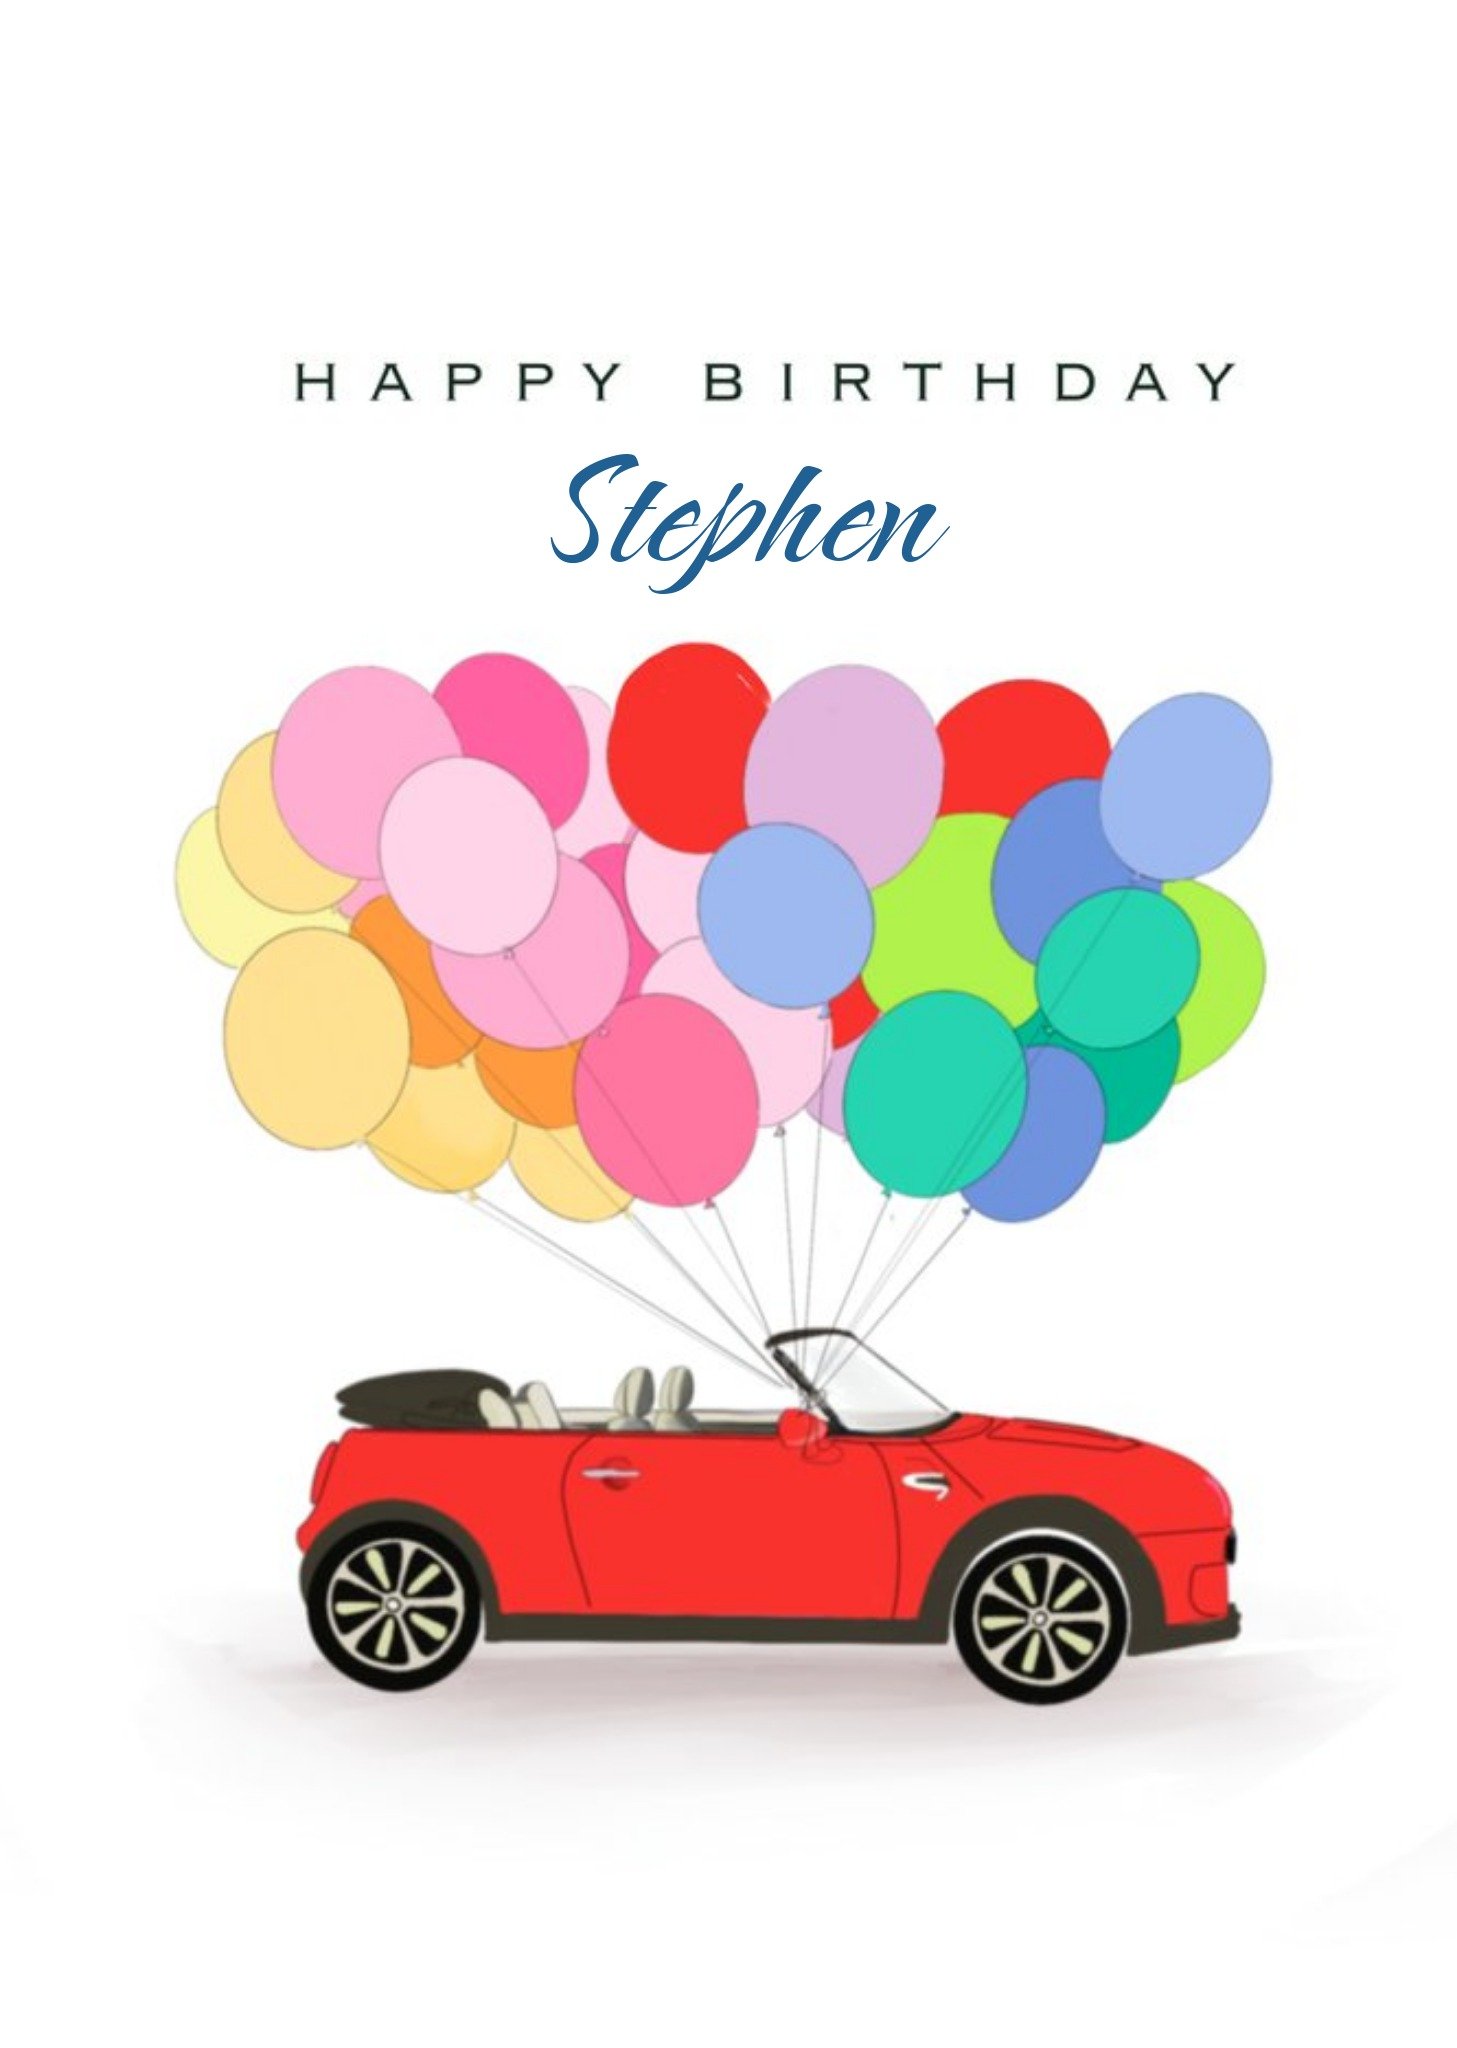 Moonpig Illustrated Red Convertible Car And Balloons Birthday Card Ecard